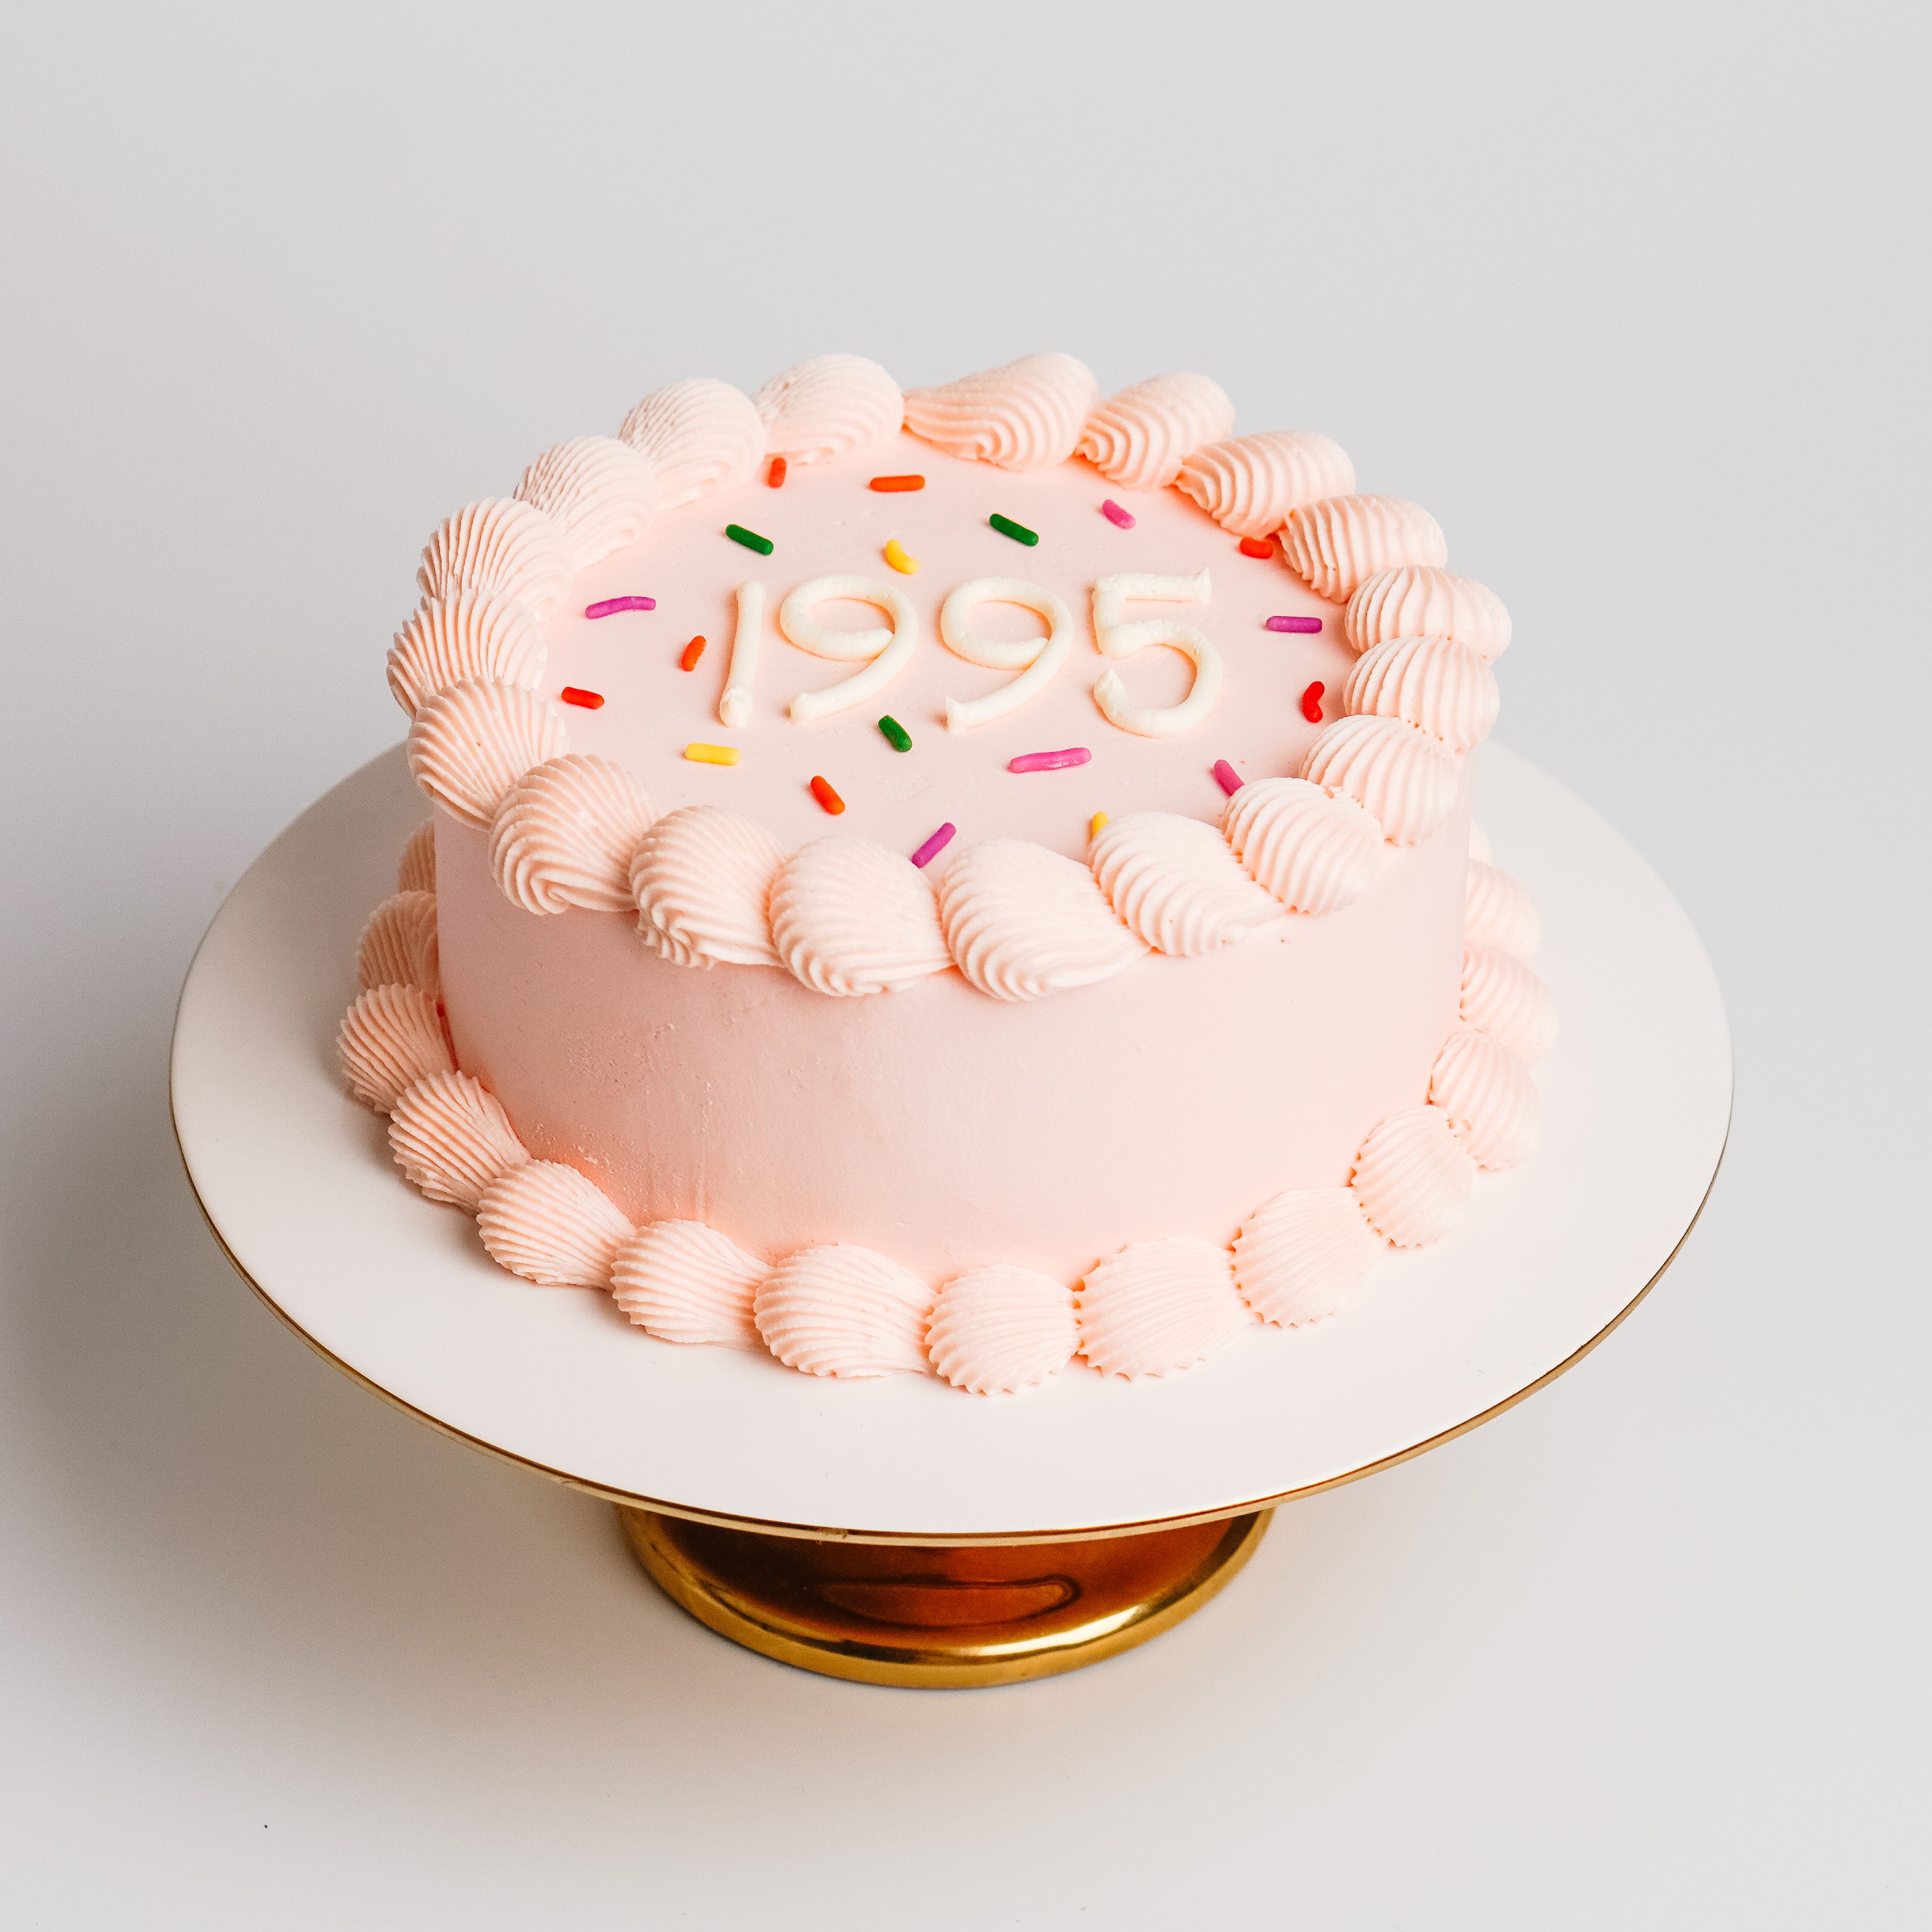 Gluten Free Minimal Birthday Cake - for Two